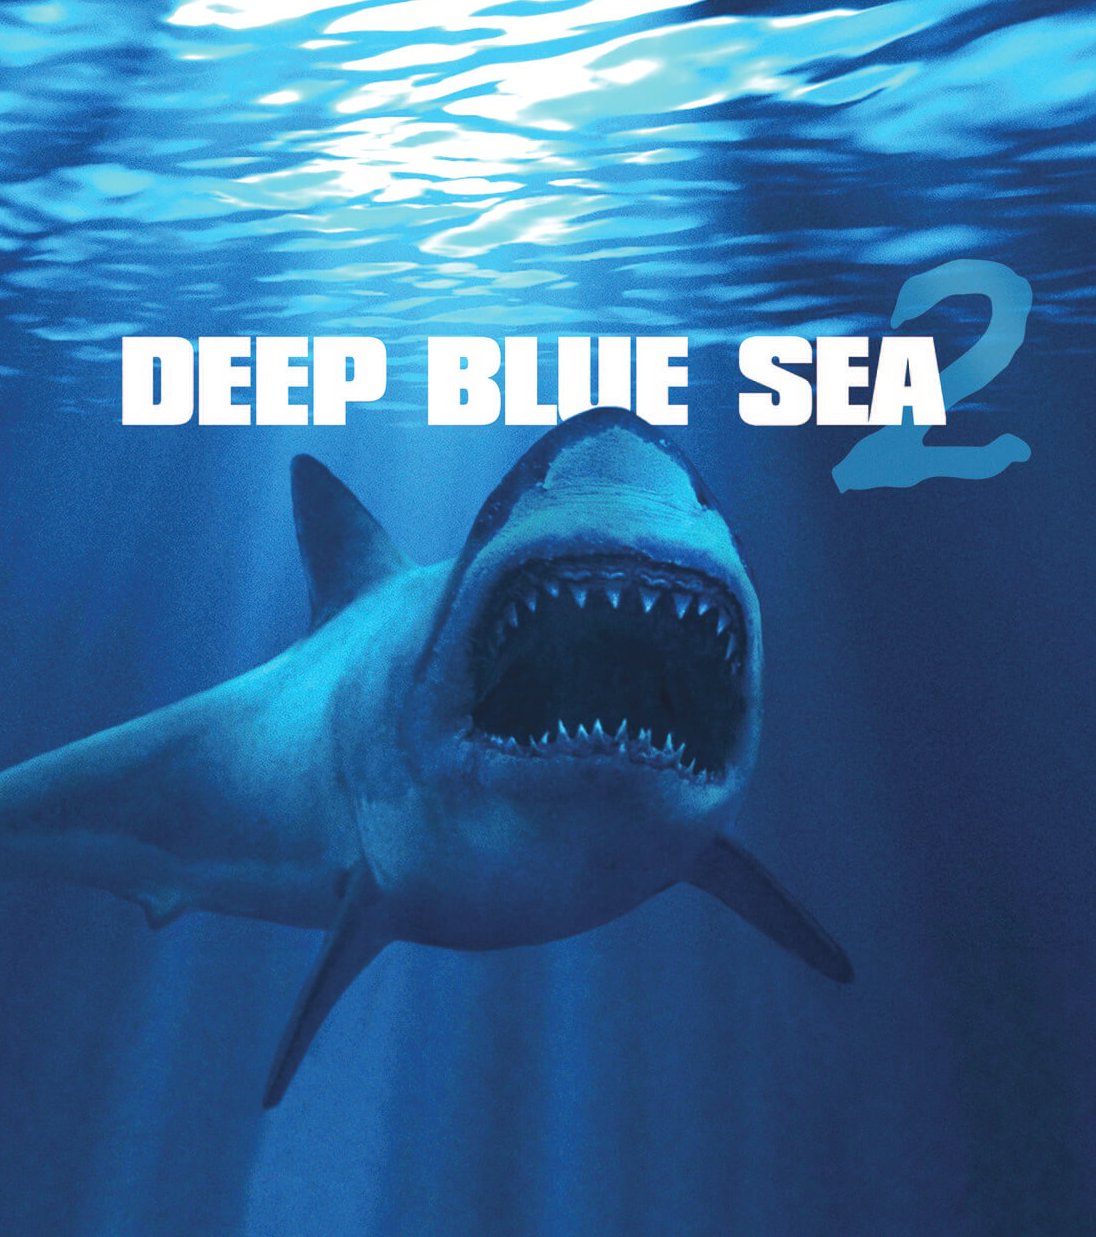 New Details on the DEEP BLUE SEA Sequel - STARBURST Magazine1096 x 1237